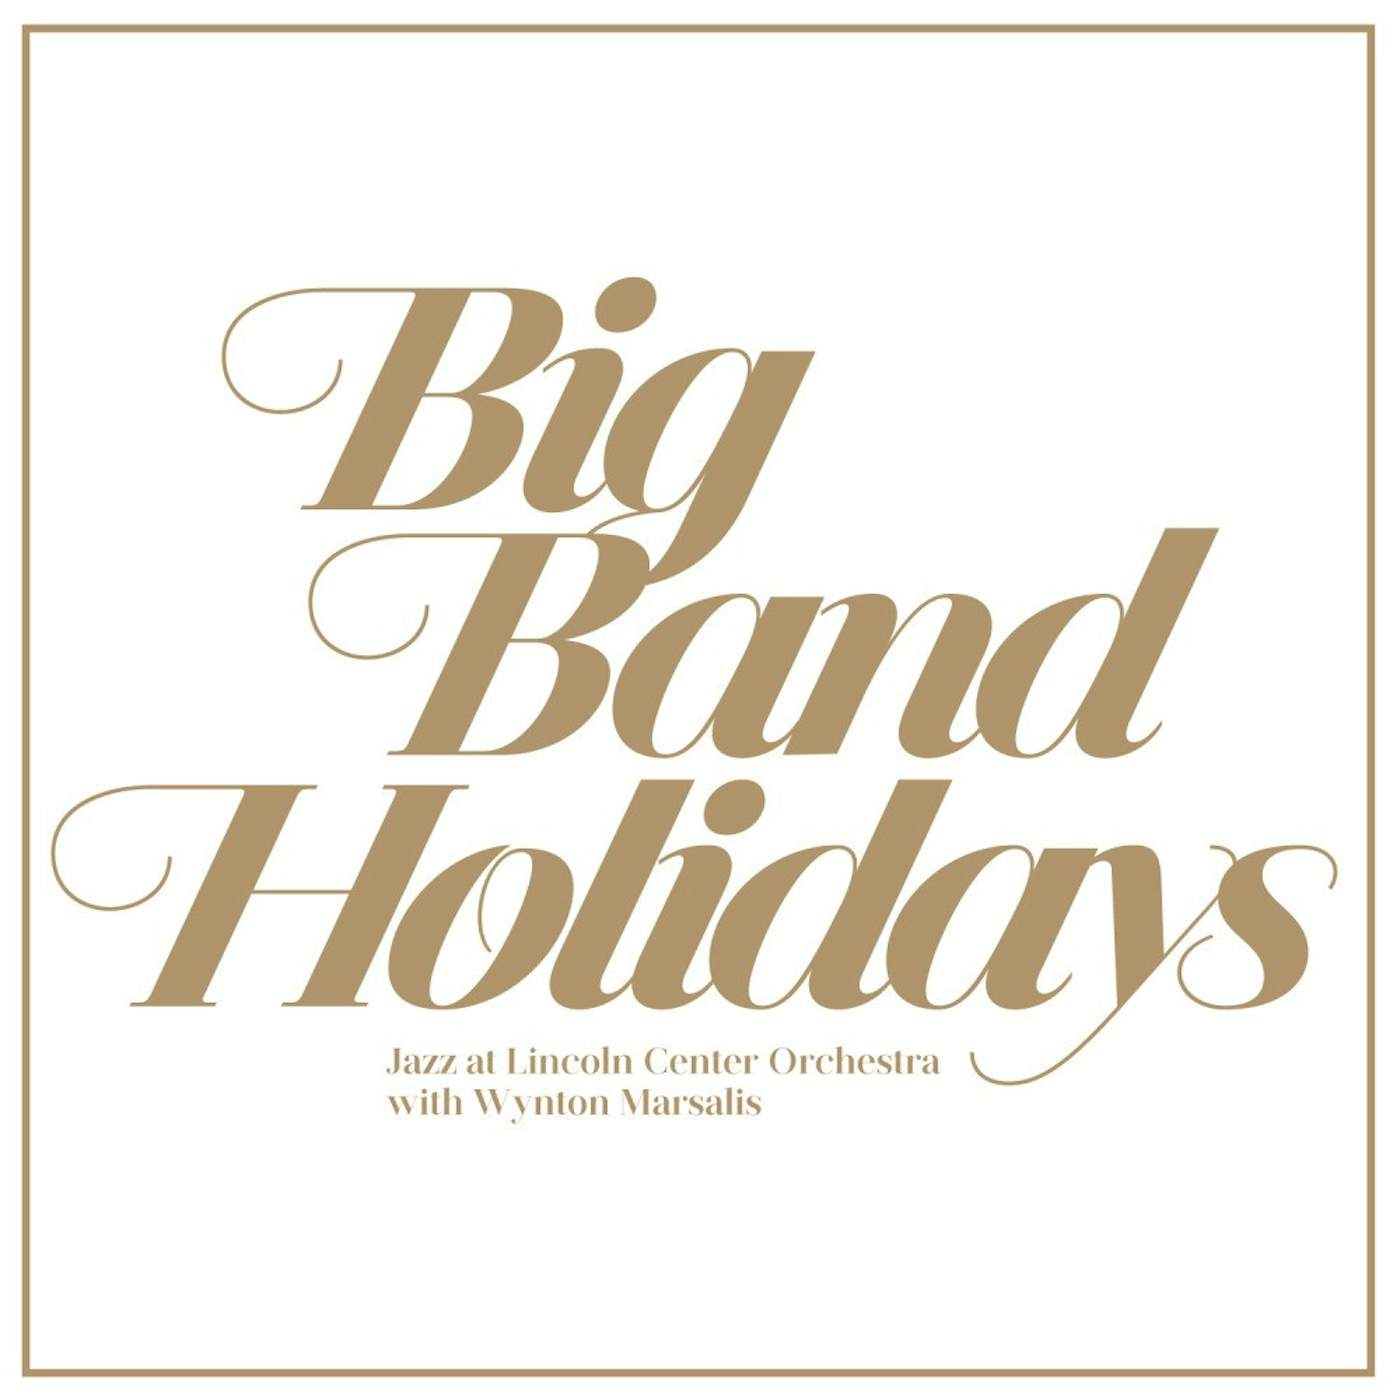 Jazz at Lincoln Center Orchestra with Wynton Marsalis Big Band Holidays Vinyl Record